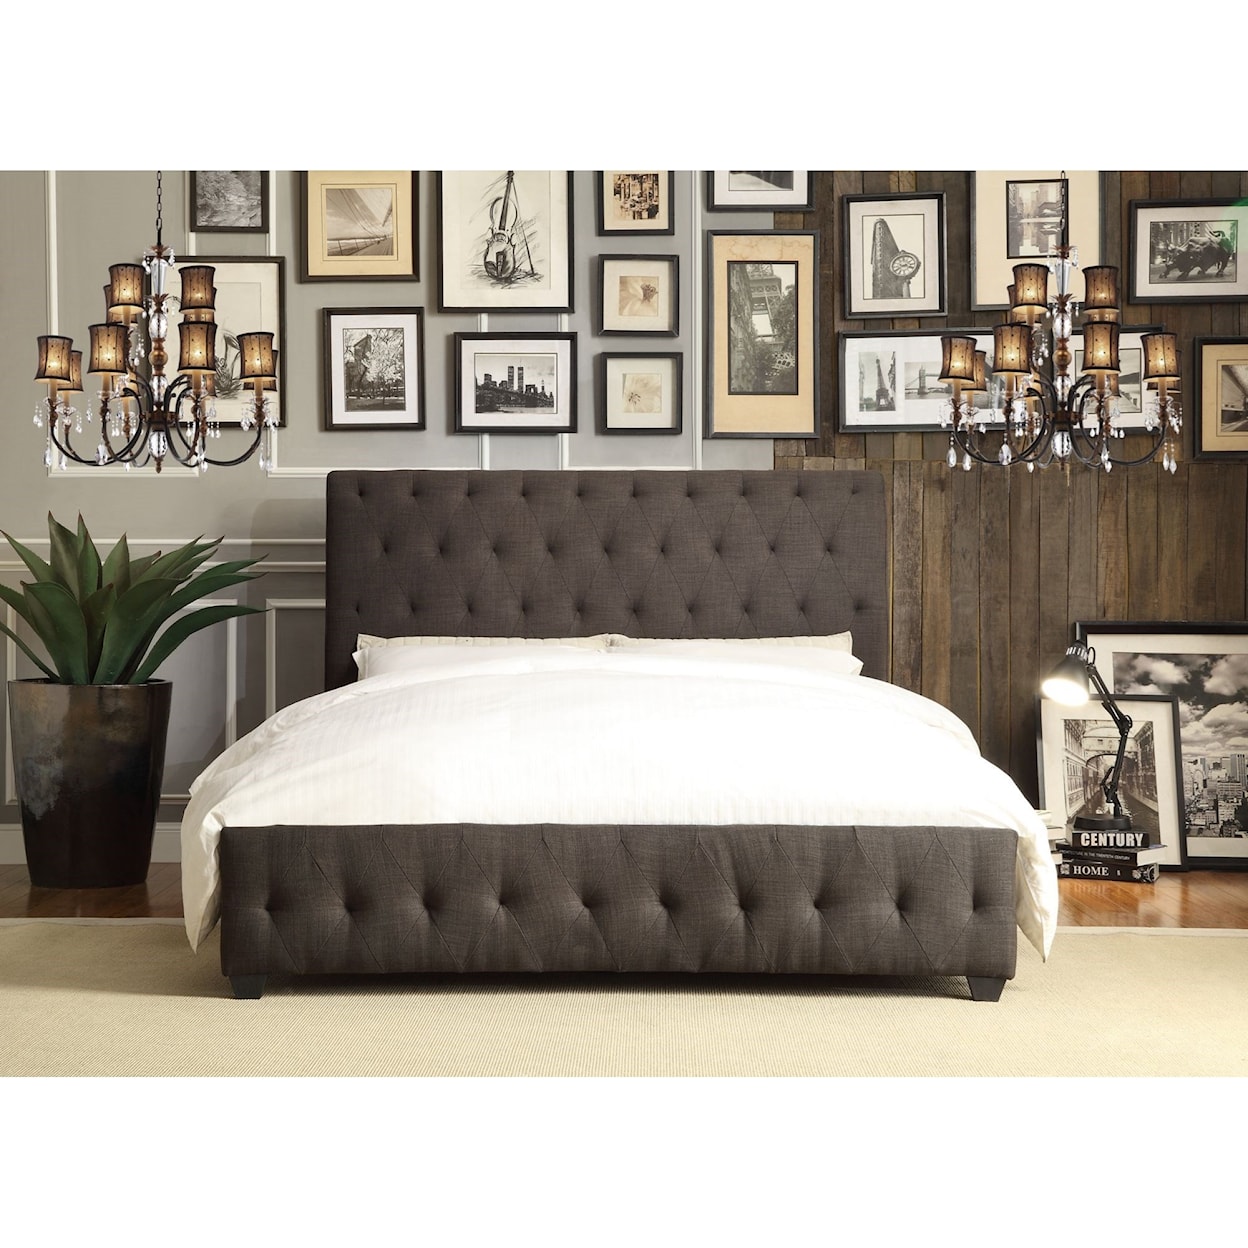 Homelegance Baldwyn Contemporary King Upholstered Sleigh Bed